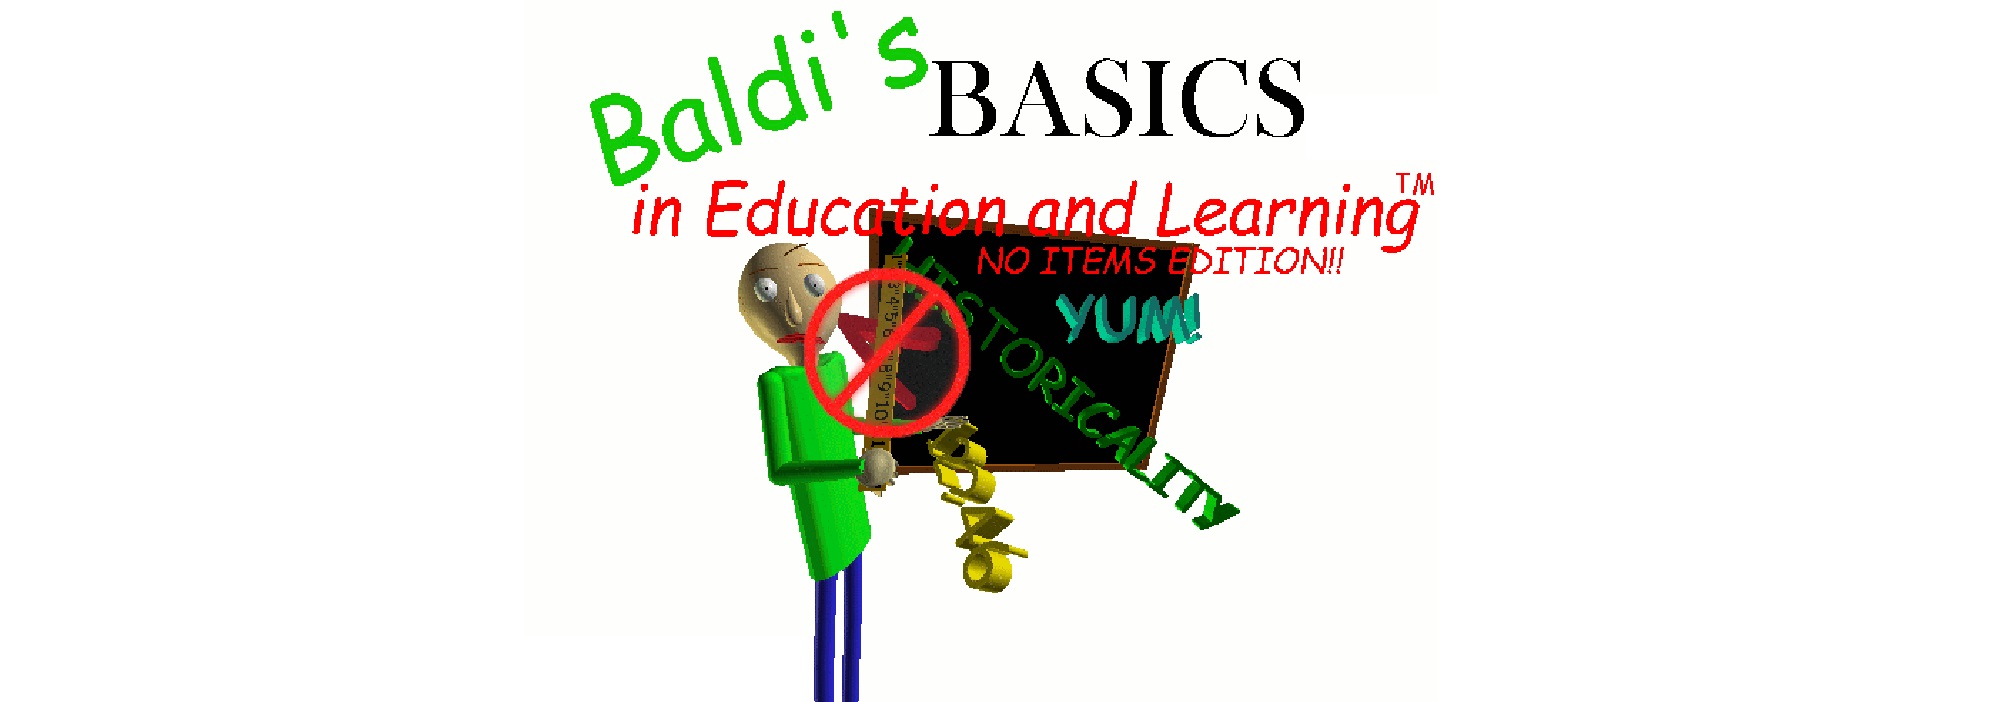 Baldi's Basics: No Items Edition